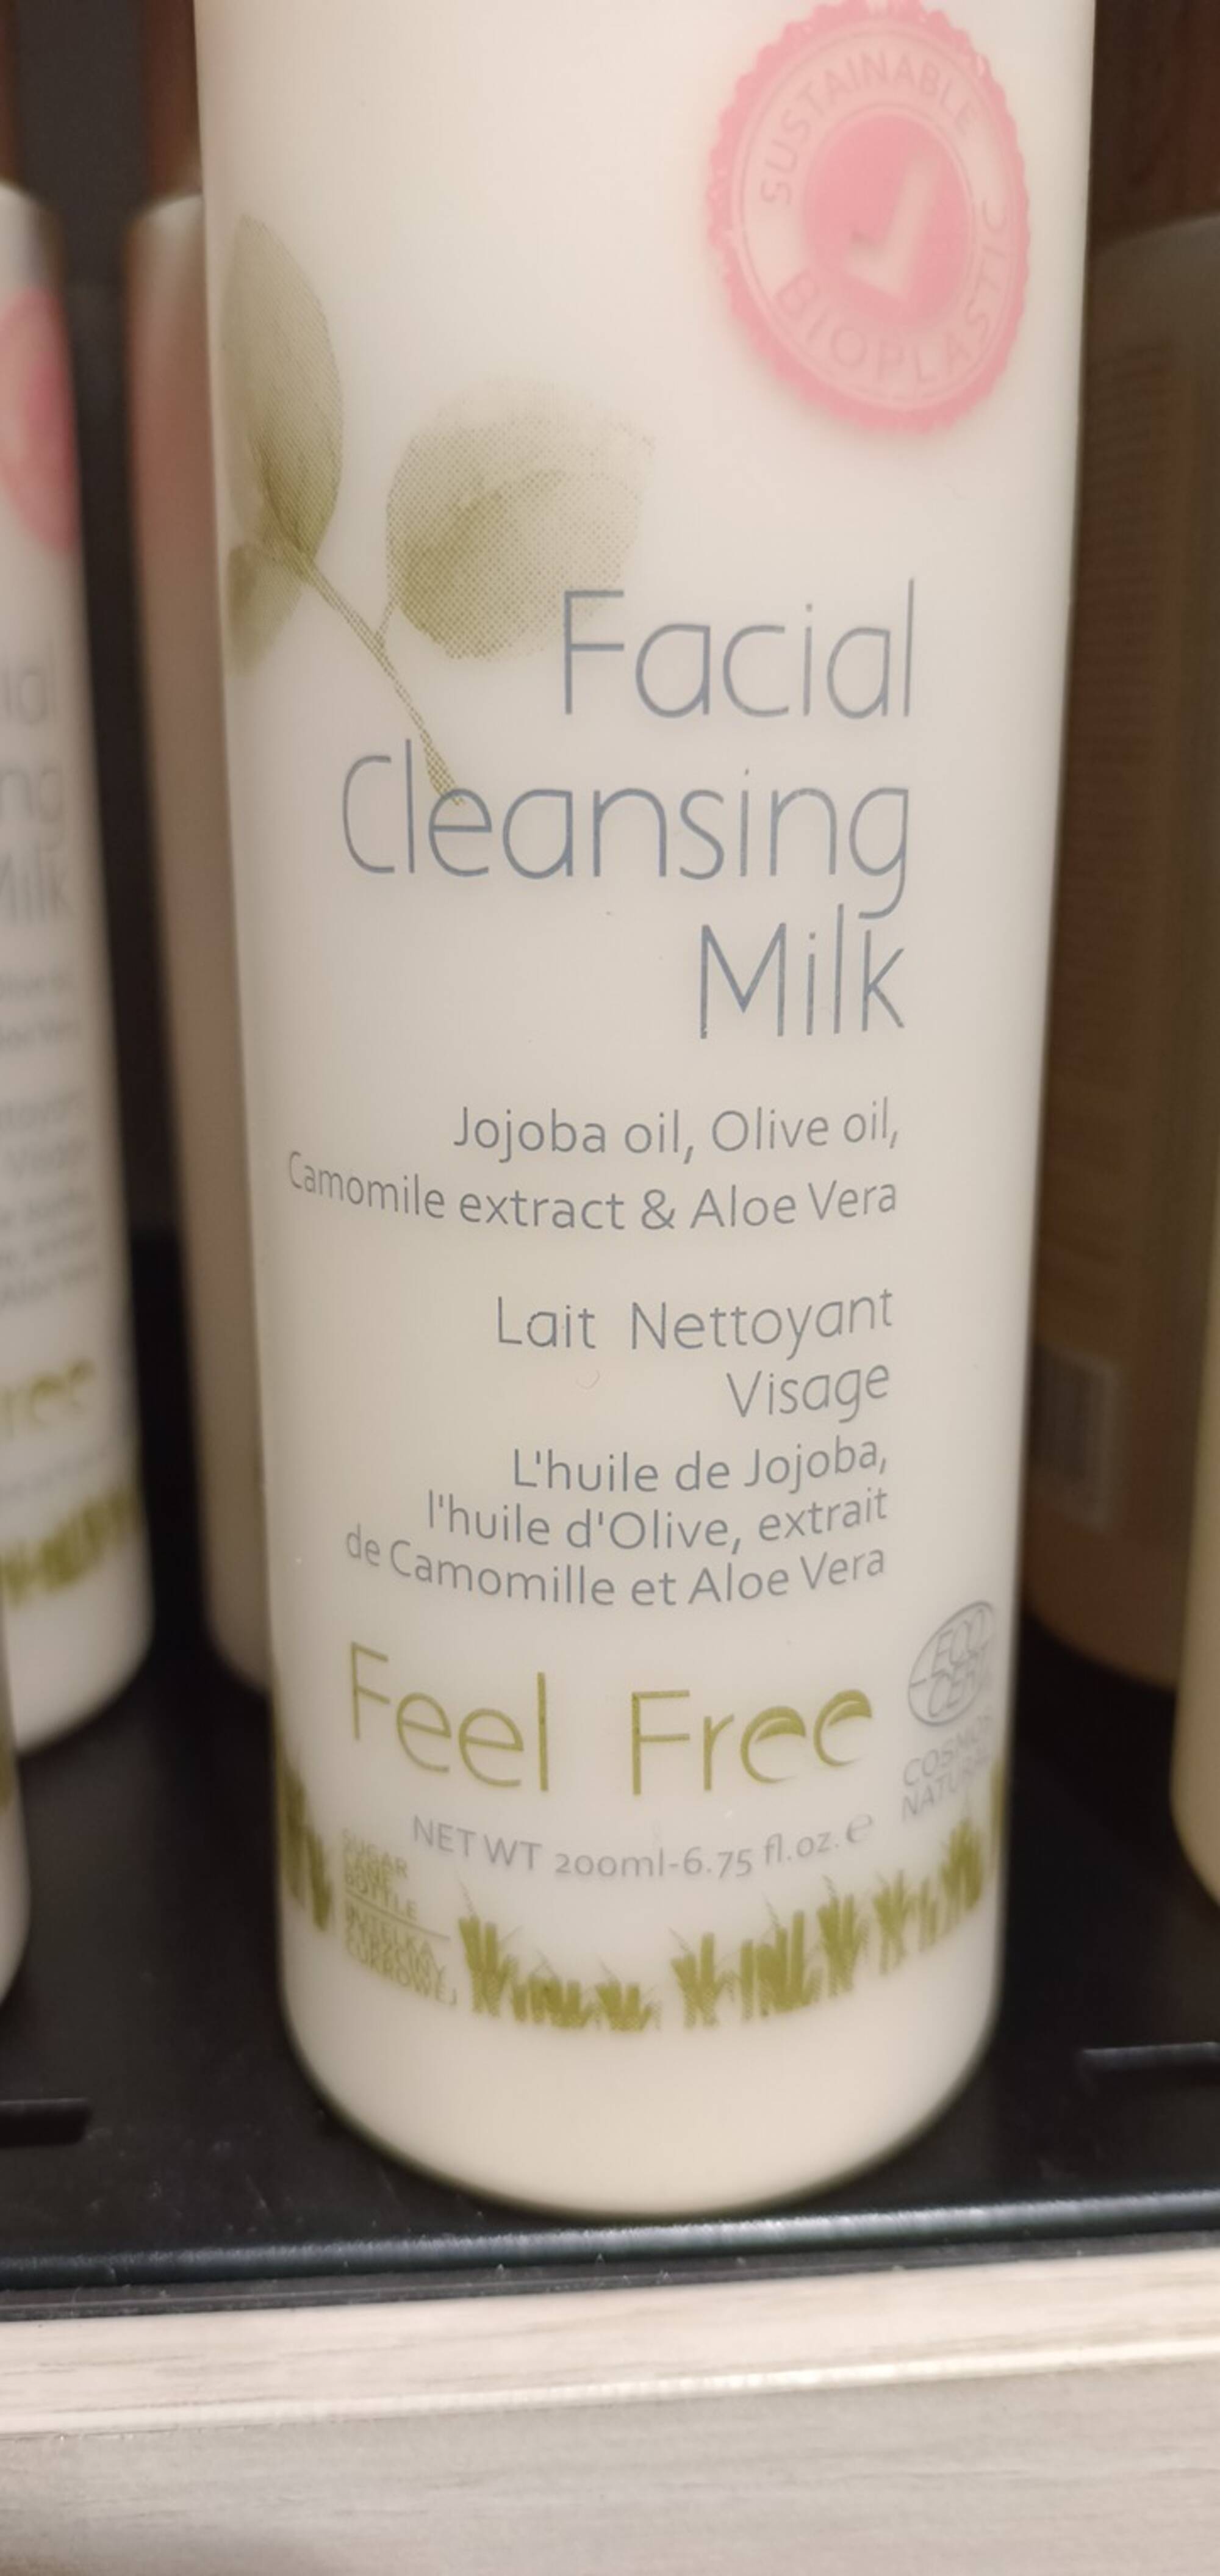 FEEL FREE - Facial cleansing milk